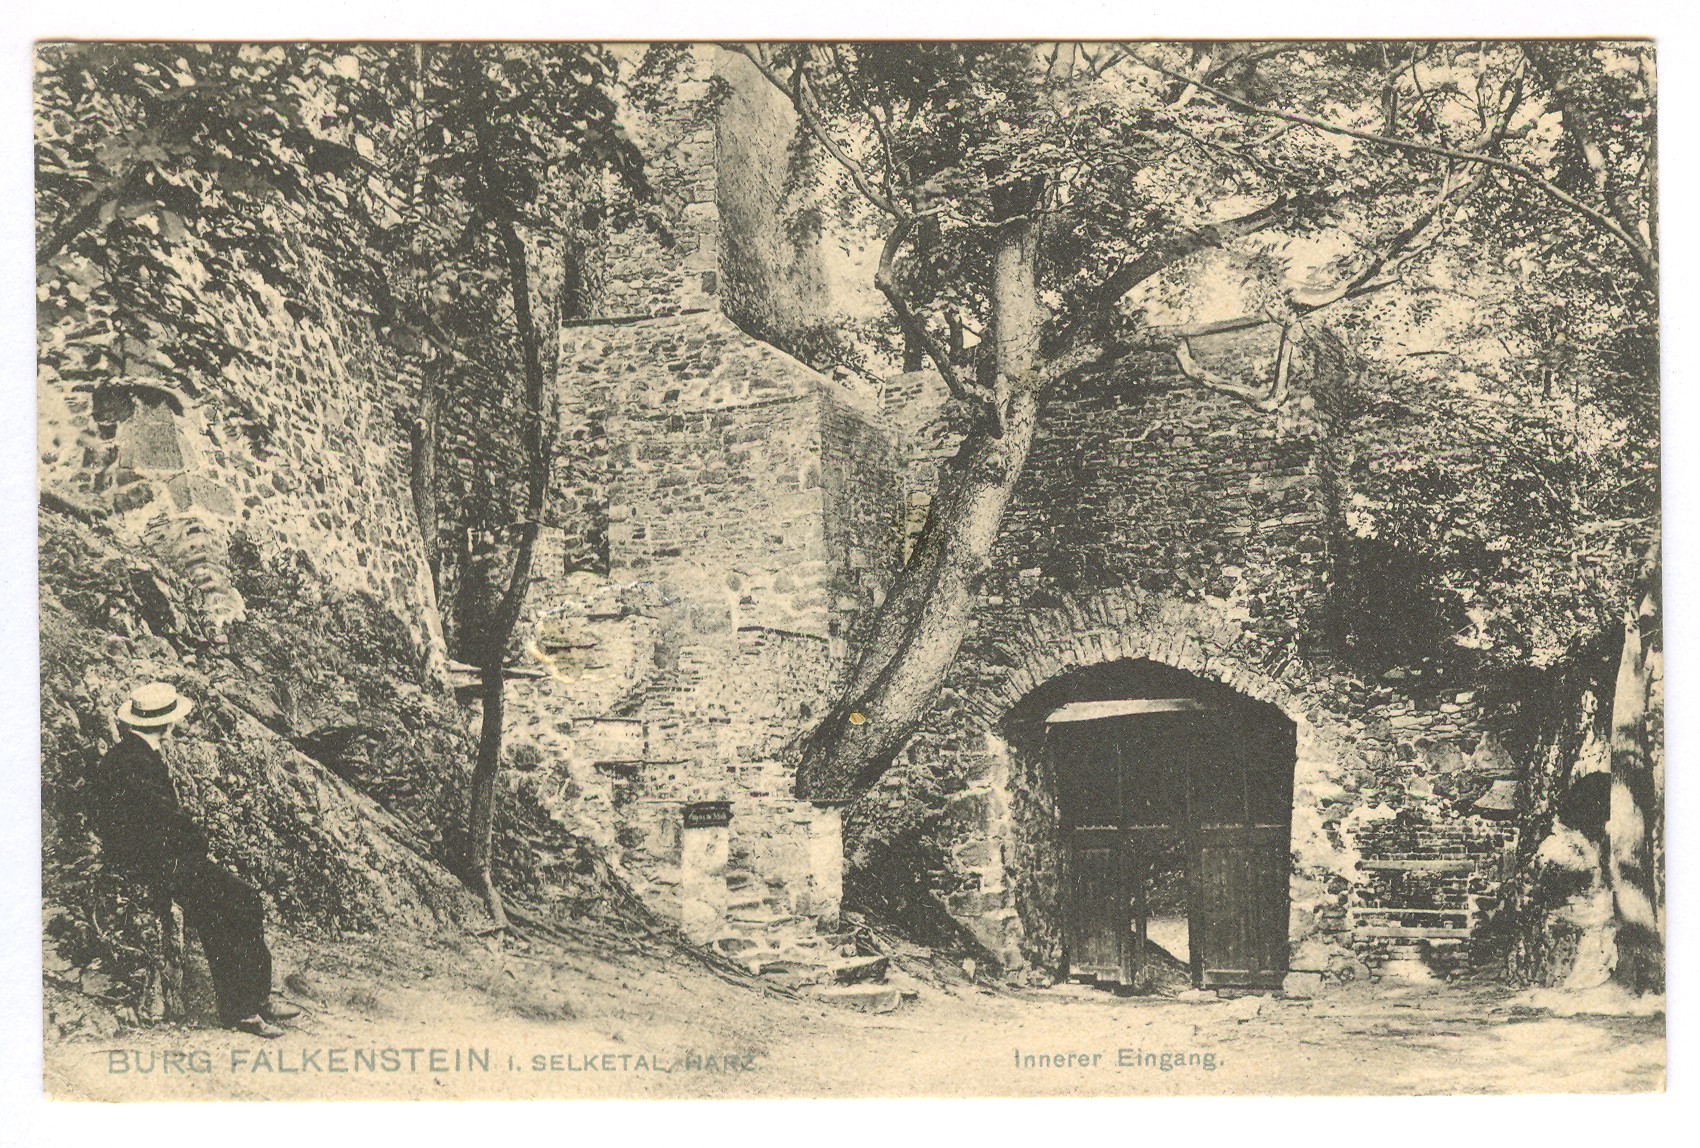 Ansichtskarte: Burg Falkenstein i. Selketal, Harz Innerer Eingang (Kulturstiftung Sachsen-Anhalt CC BY-NC-SA)